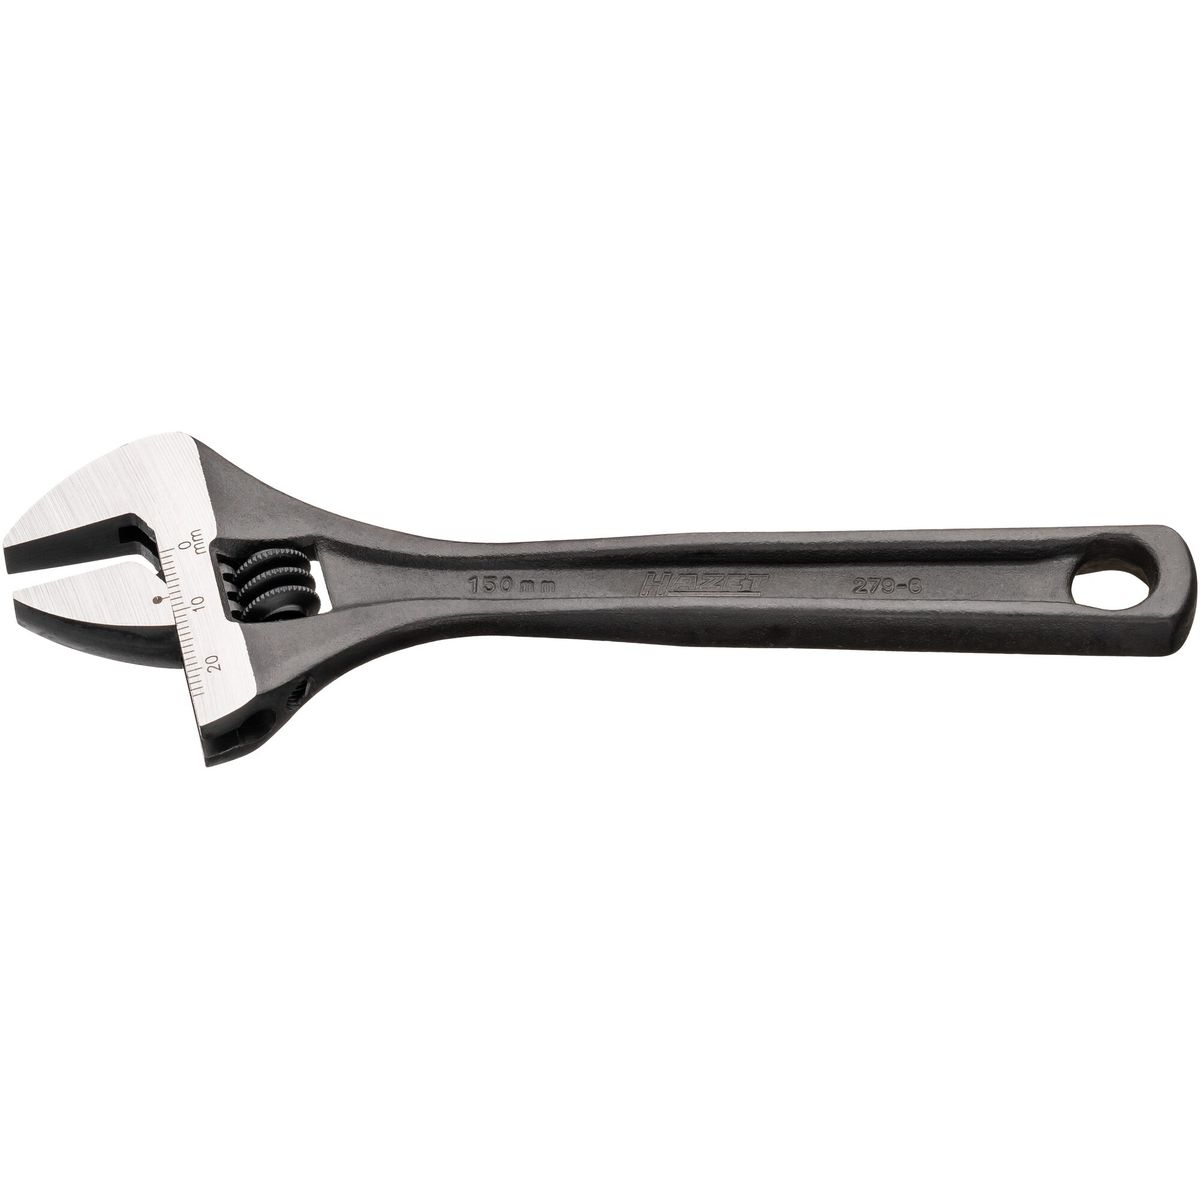 Adjustable Wrench No.279-6 Hazet®